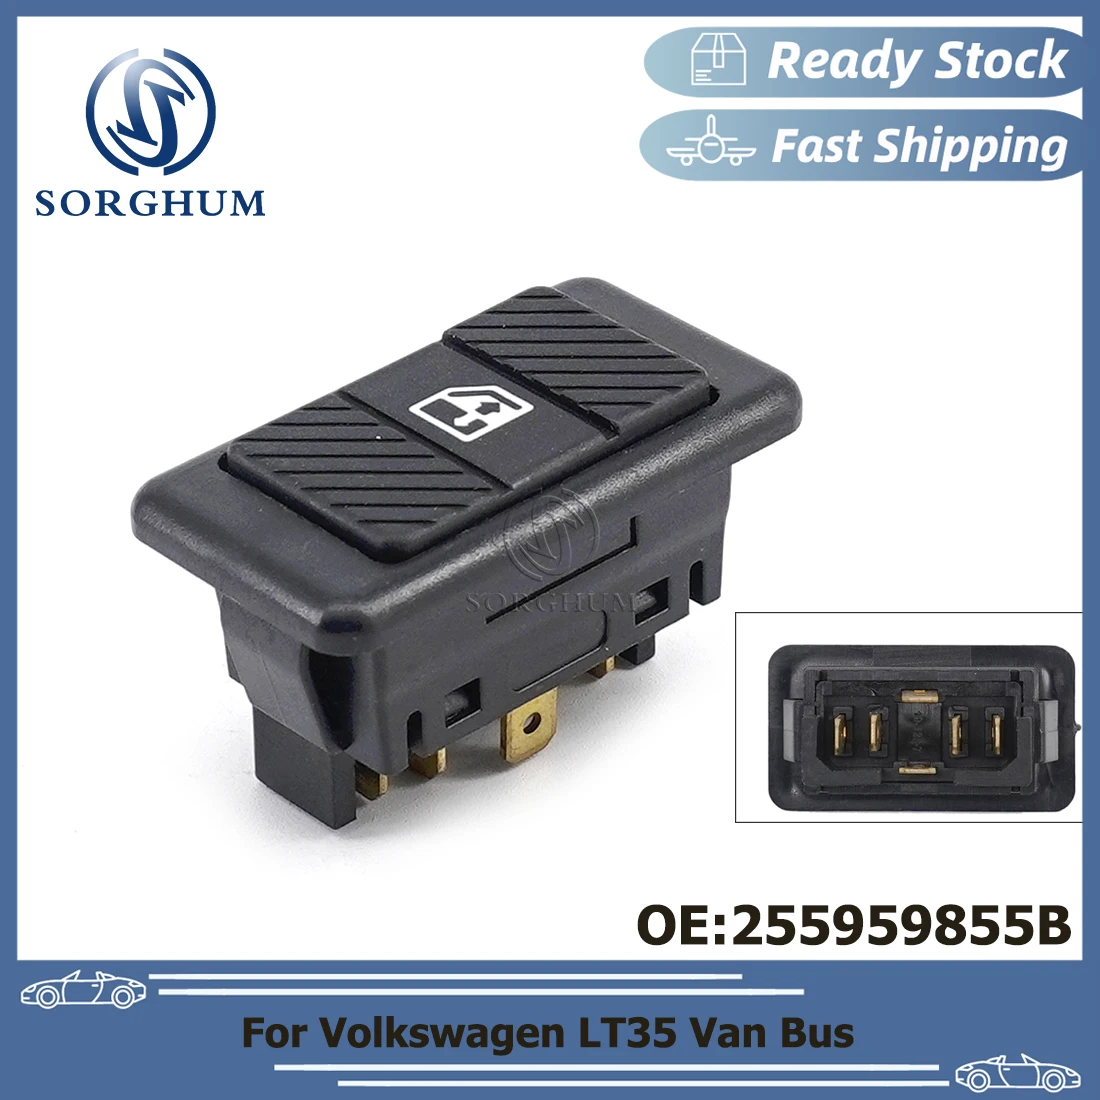 

SORGHUM Car Accessories For VOLKSWAGEN LT28 LT35 LT46 Van Bus Single Electric Window Control Switch 6Pin 255959855B 357959855A